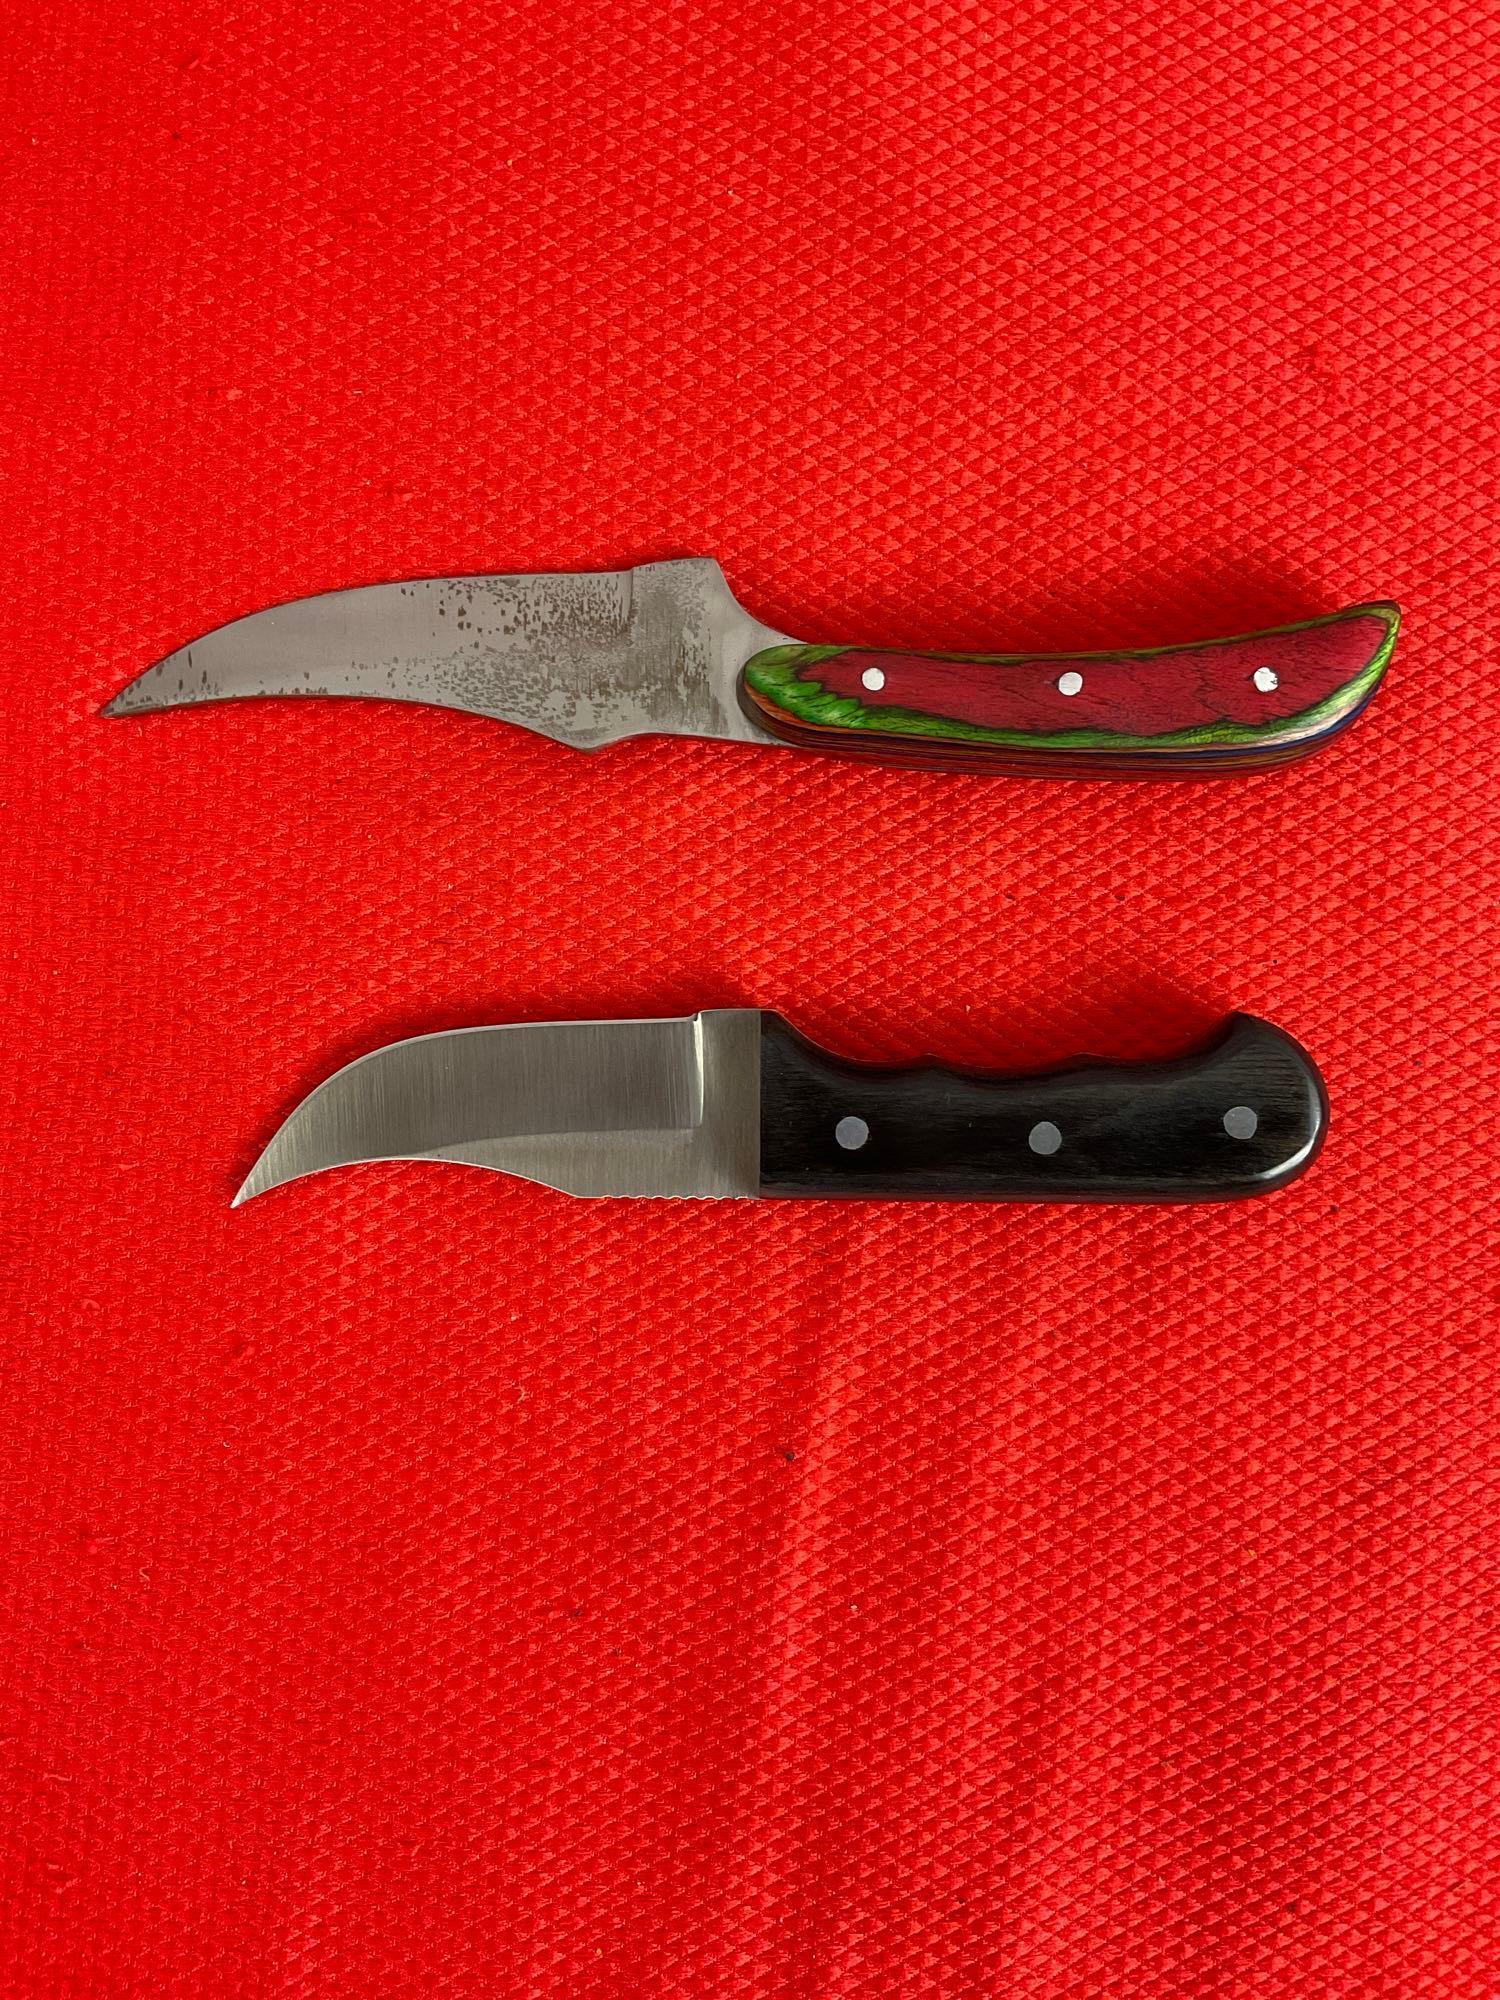 2 pcs Steel Fixed Blade Skinner Knives w/ Wooden Handles, Models 203240-MC & 211187. See pics.